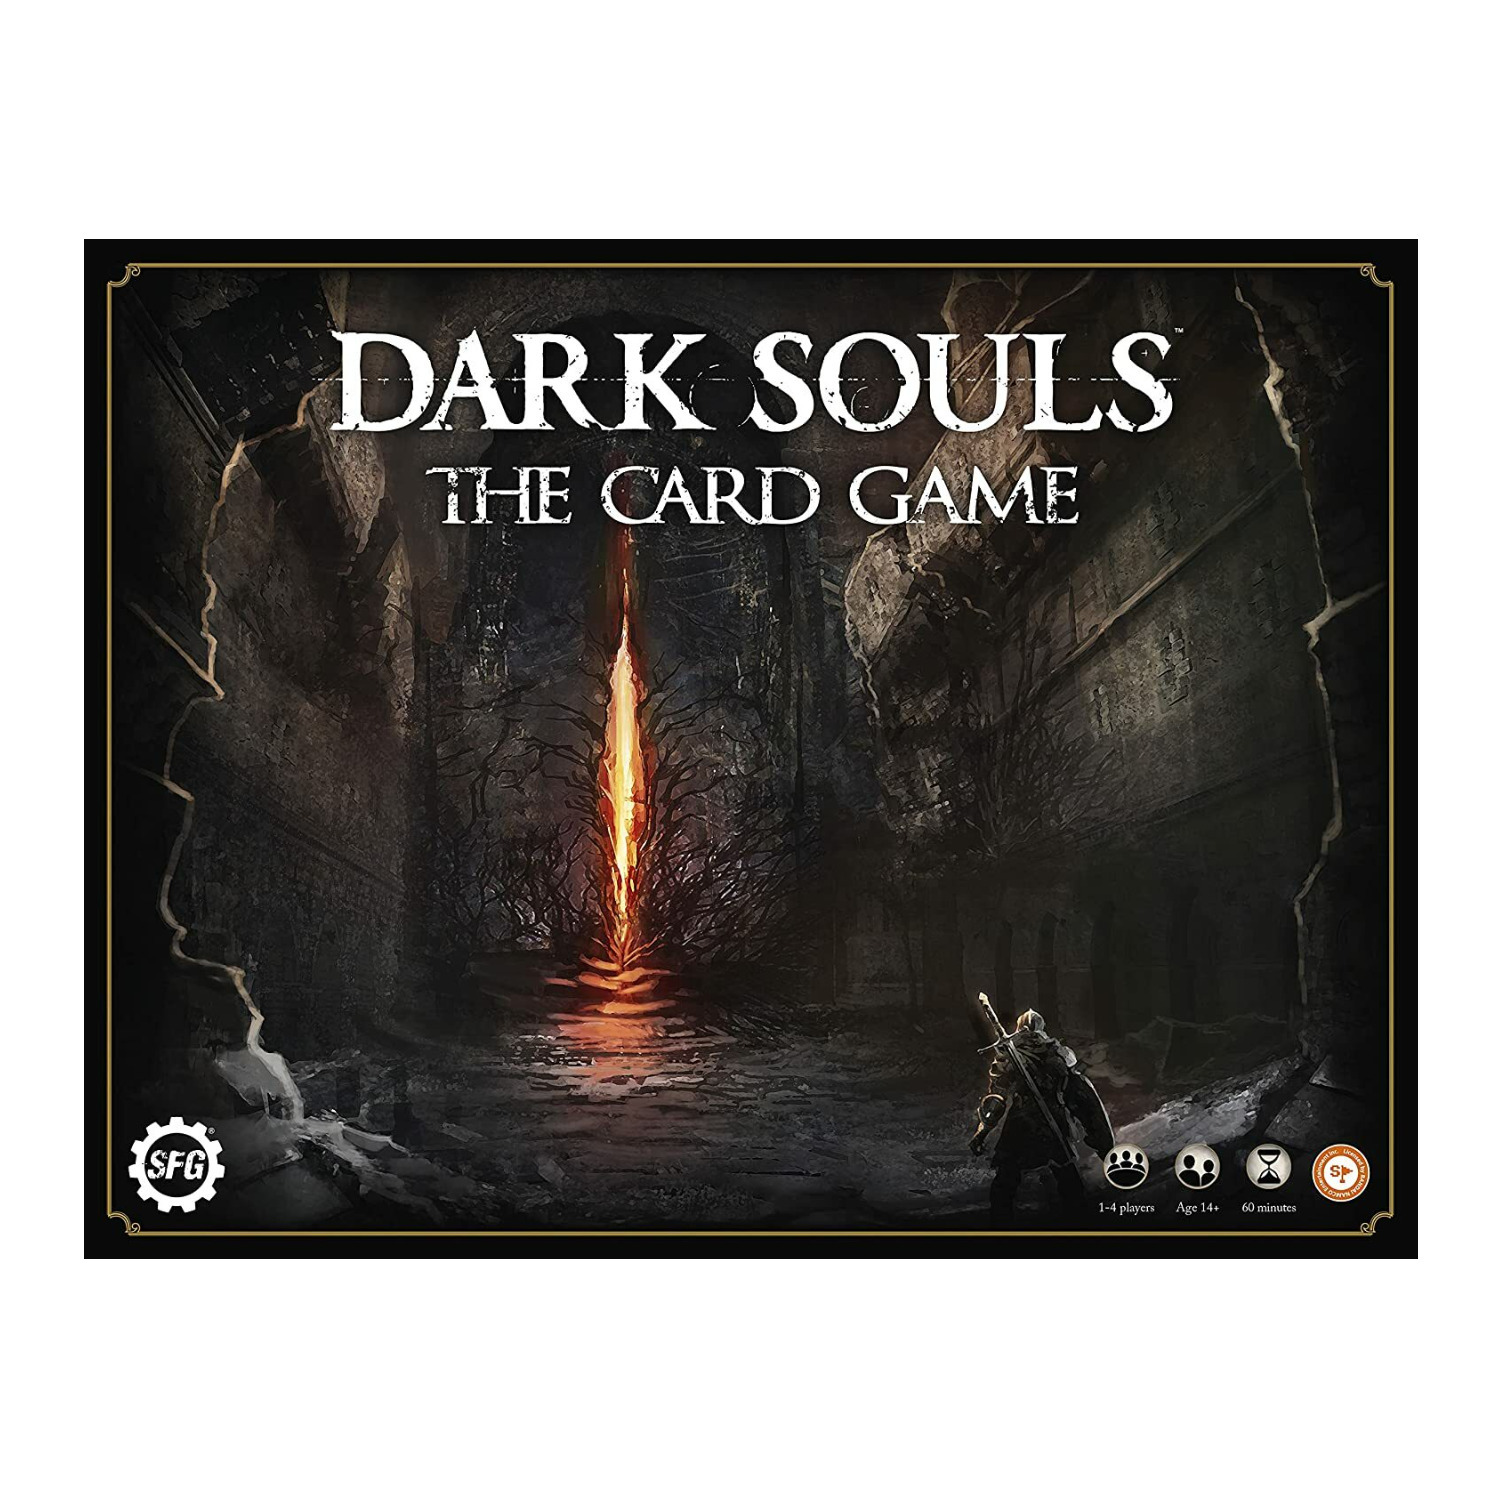 Dark Souls Steamforged Games Ltd. Dark Souls: The Card Game